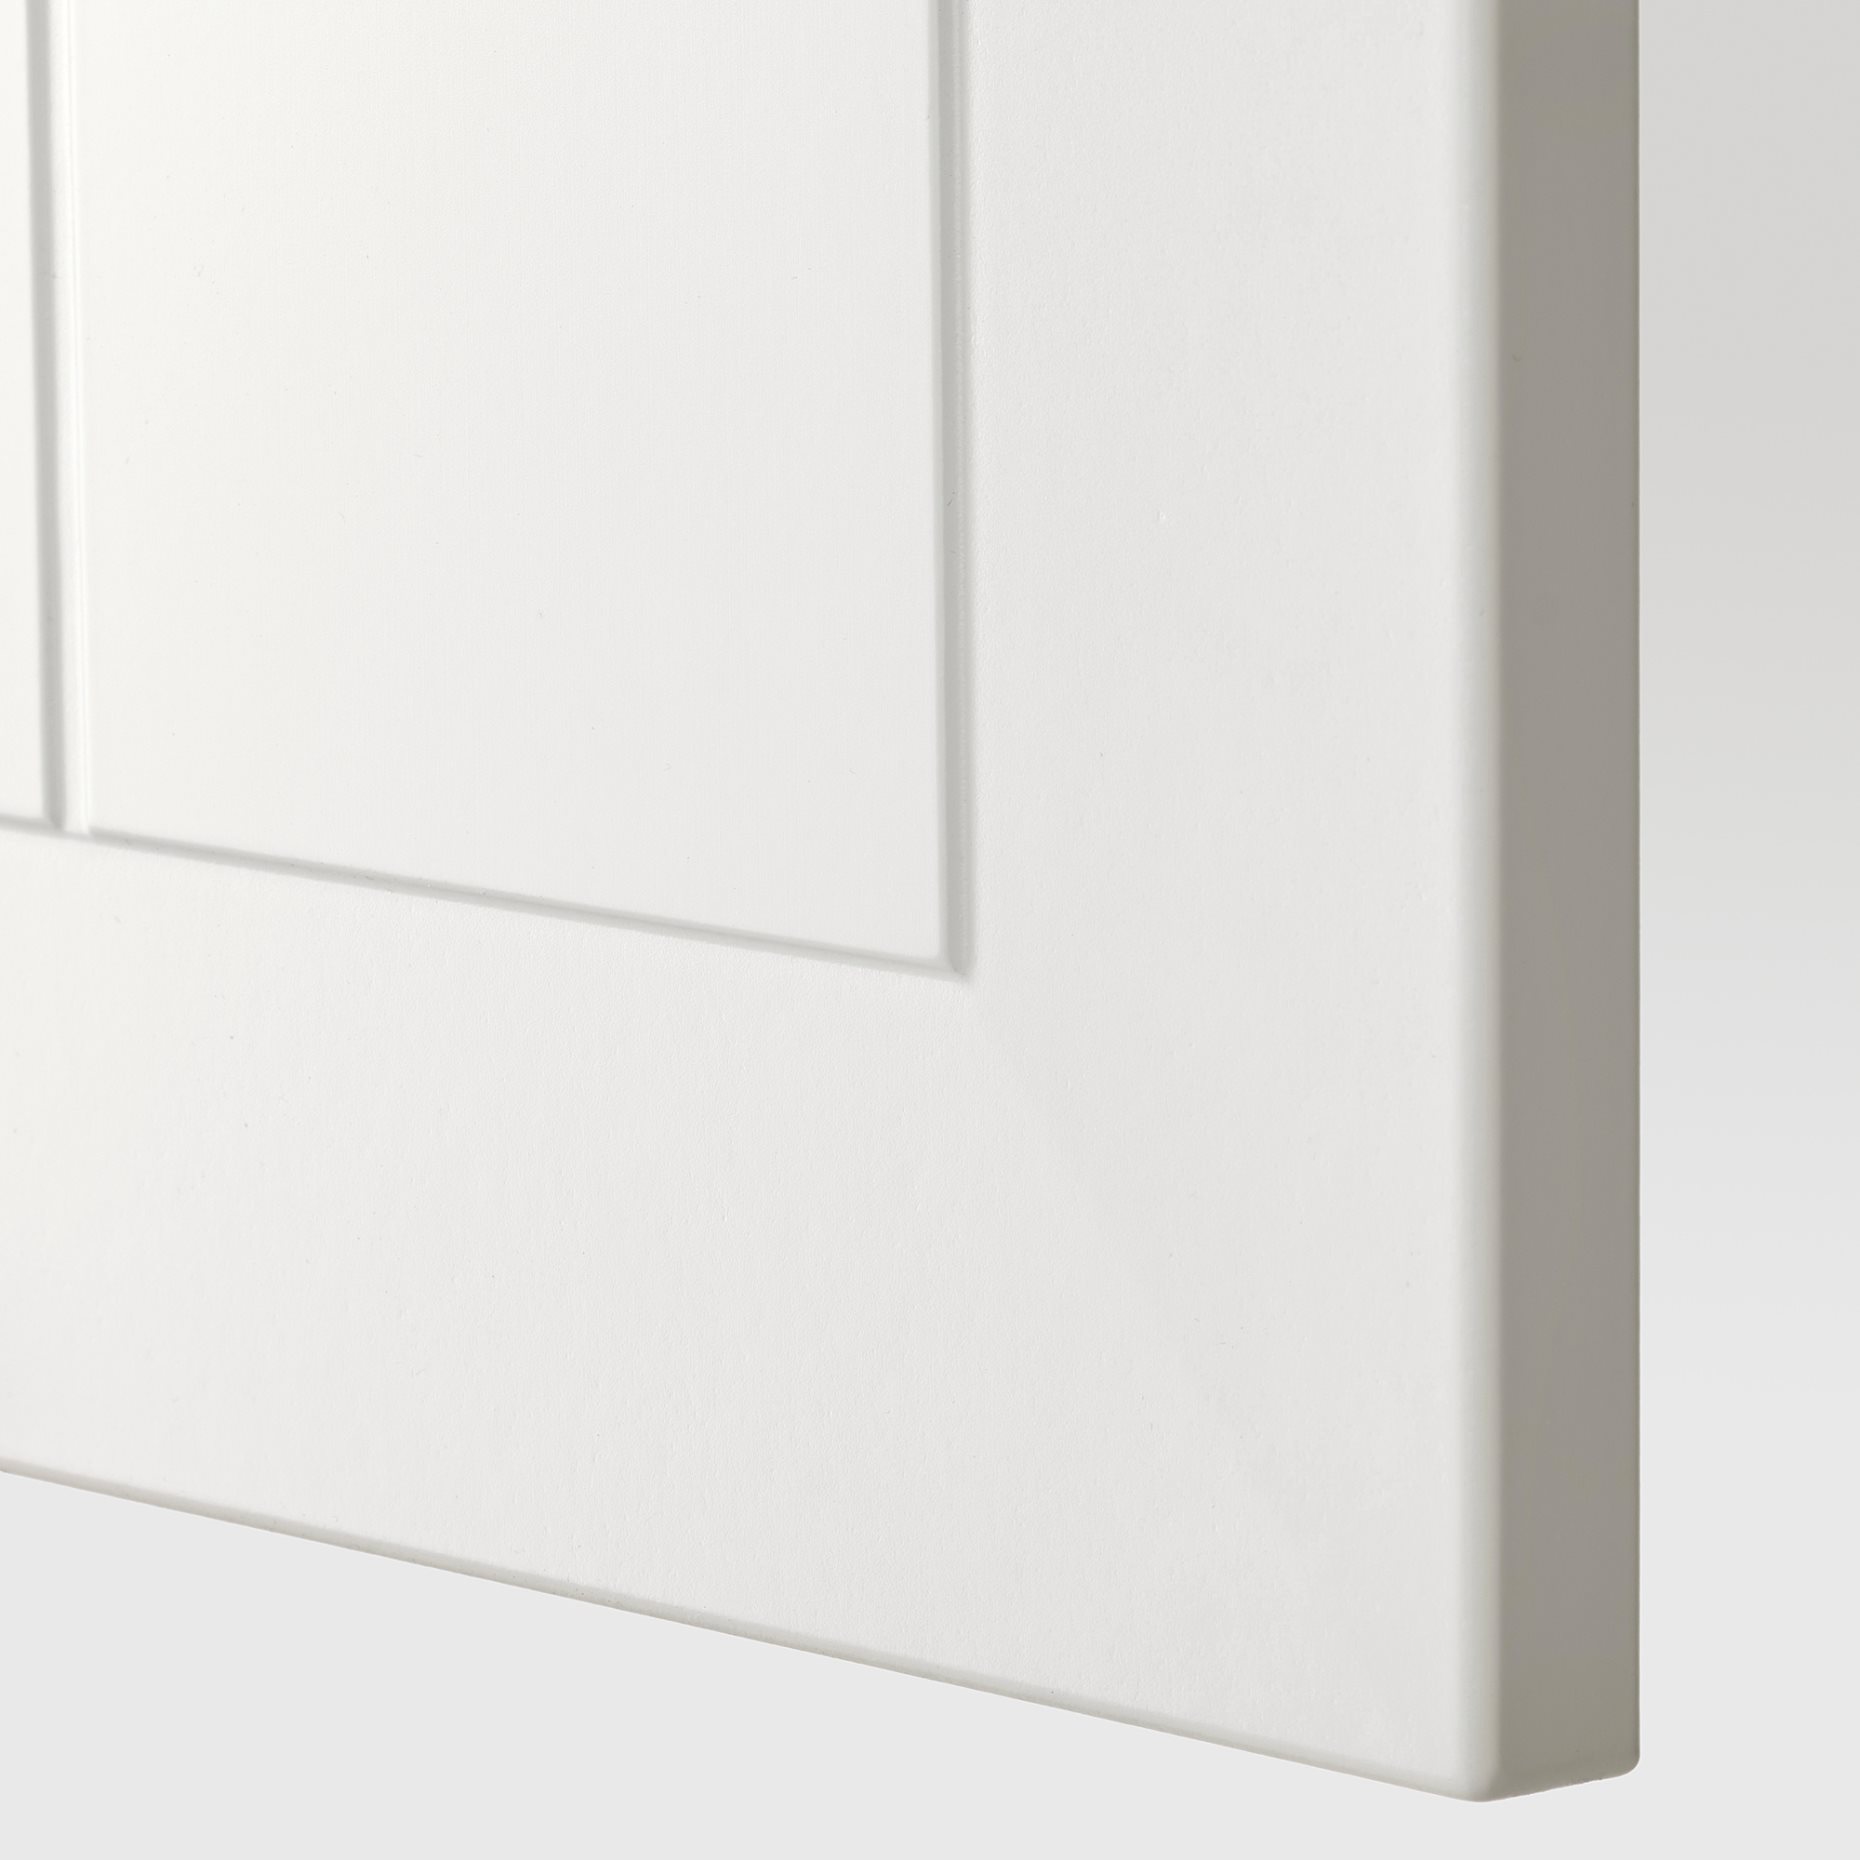 METOD, ντουλάπι βάσης με ράφια/2 πόρτες, 80x60 cm, 394.545.99